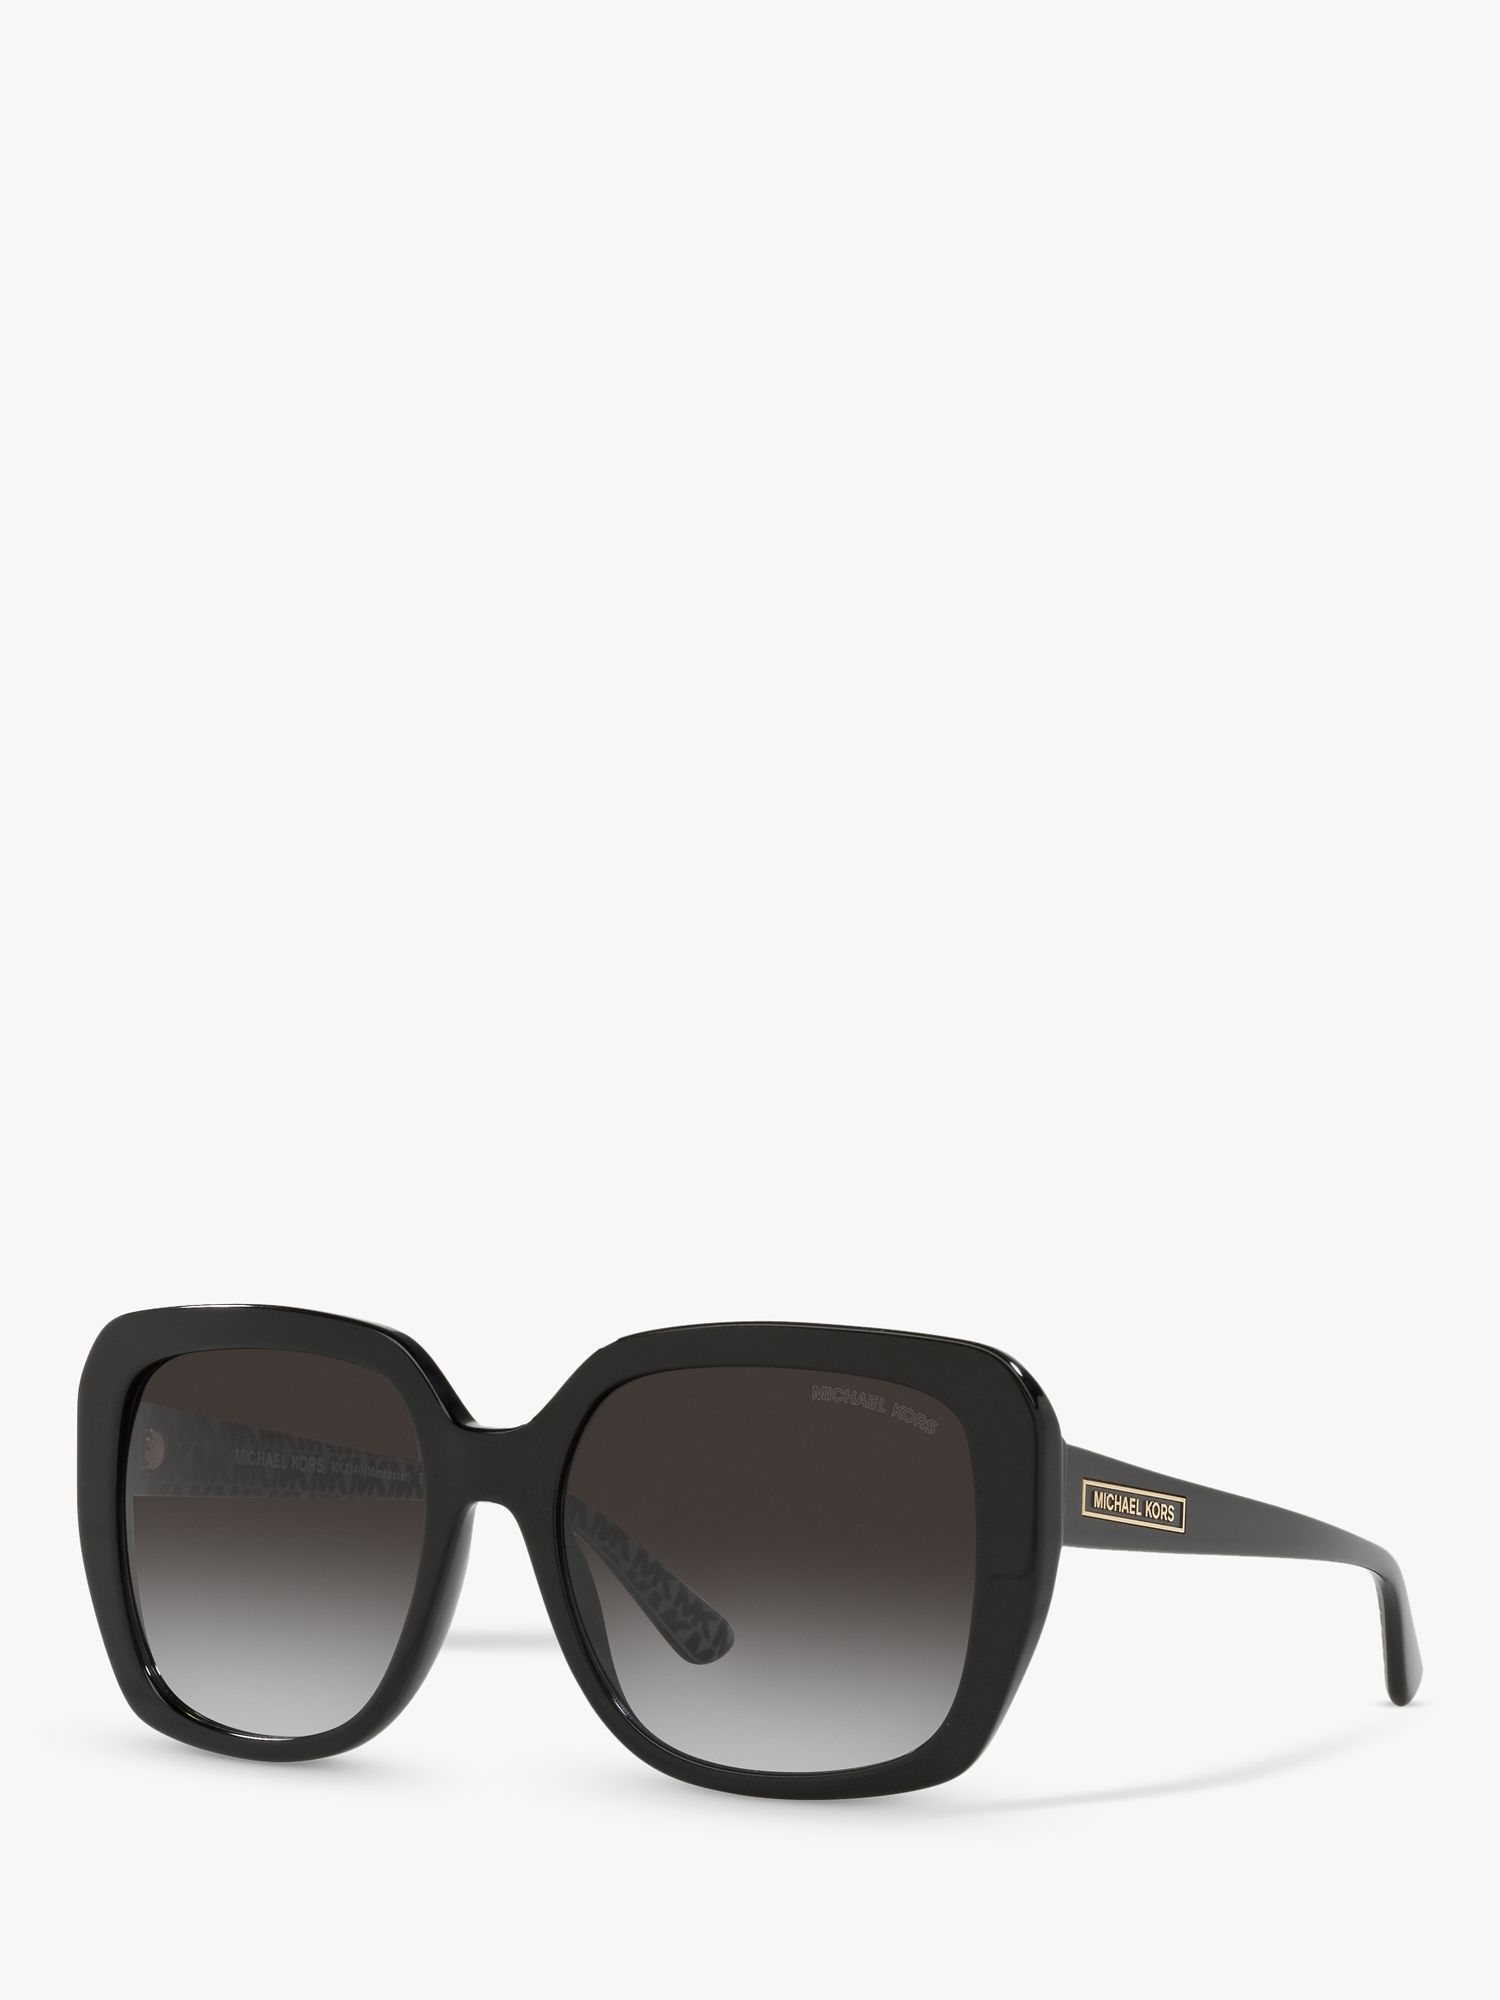 Michael Kors MK2140 Women's Manhasset Square Sunglasses, Black/Grey ...